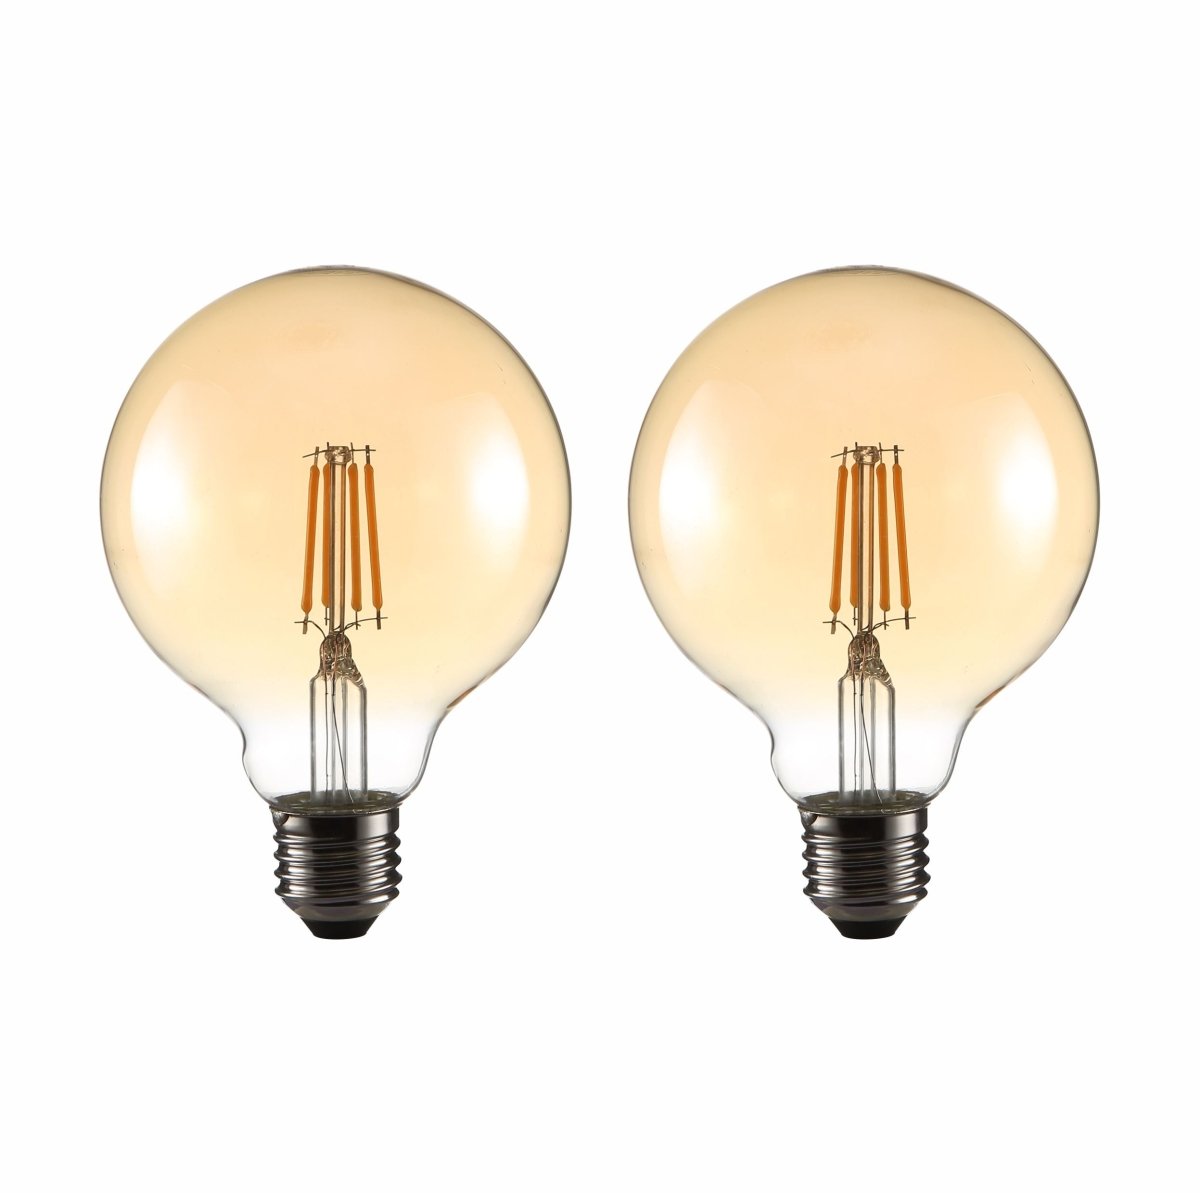 LED Filament Globe Bulb E27 Edison Screw Warm White 2400K G95 4w pack of 2